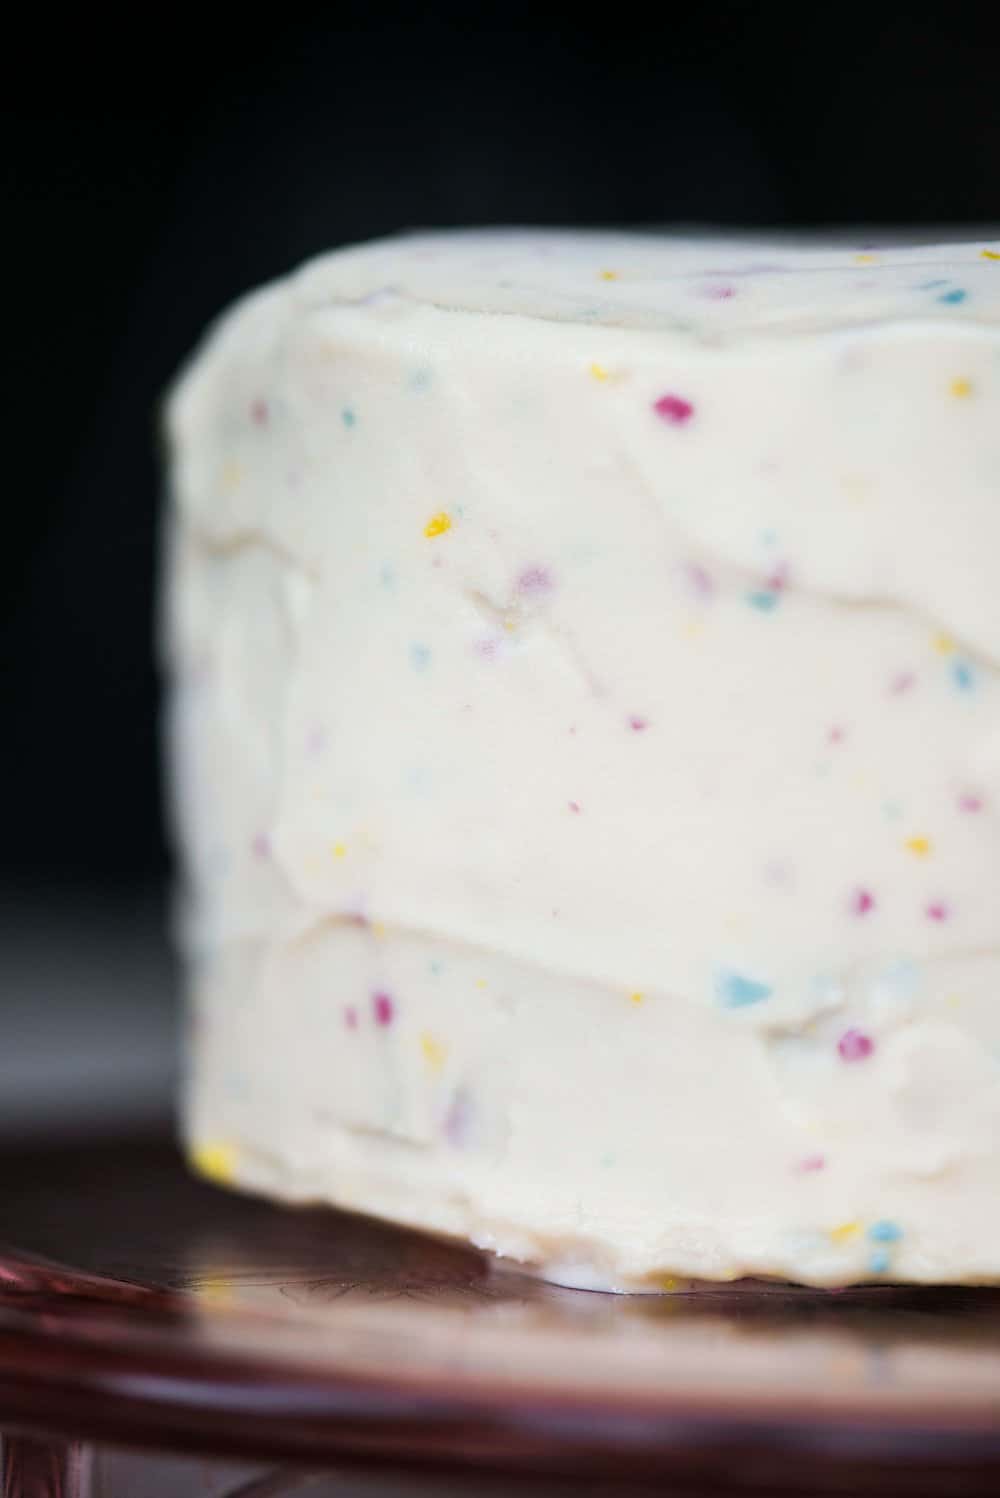 ice cream frosting on a birthday cake